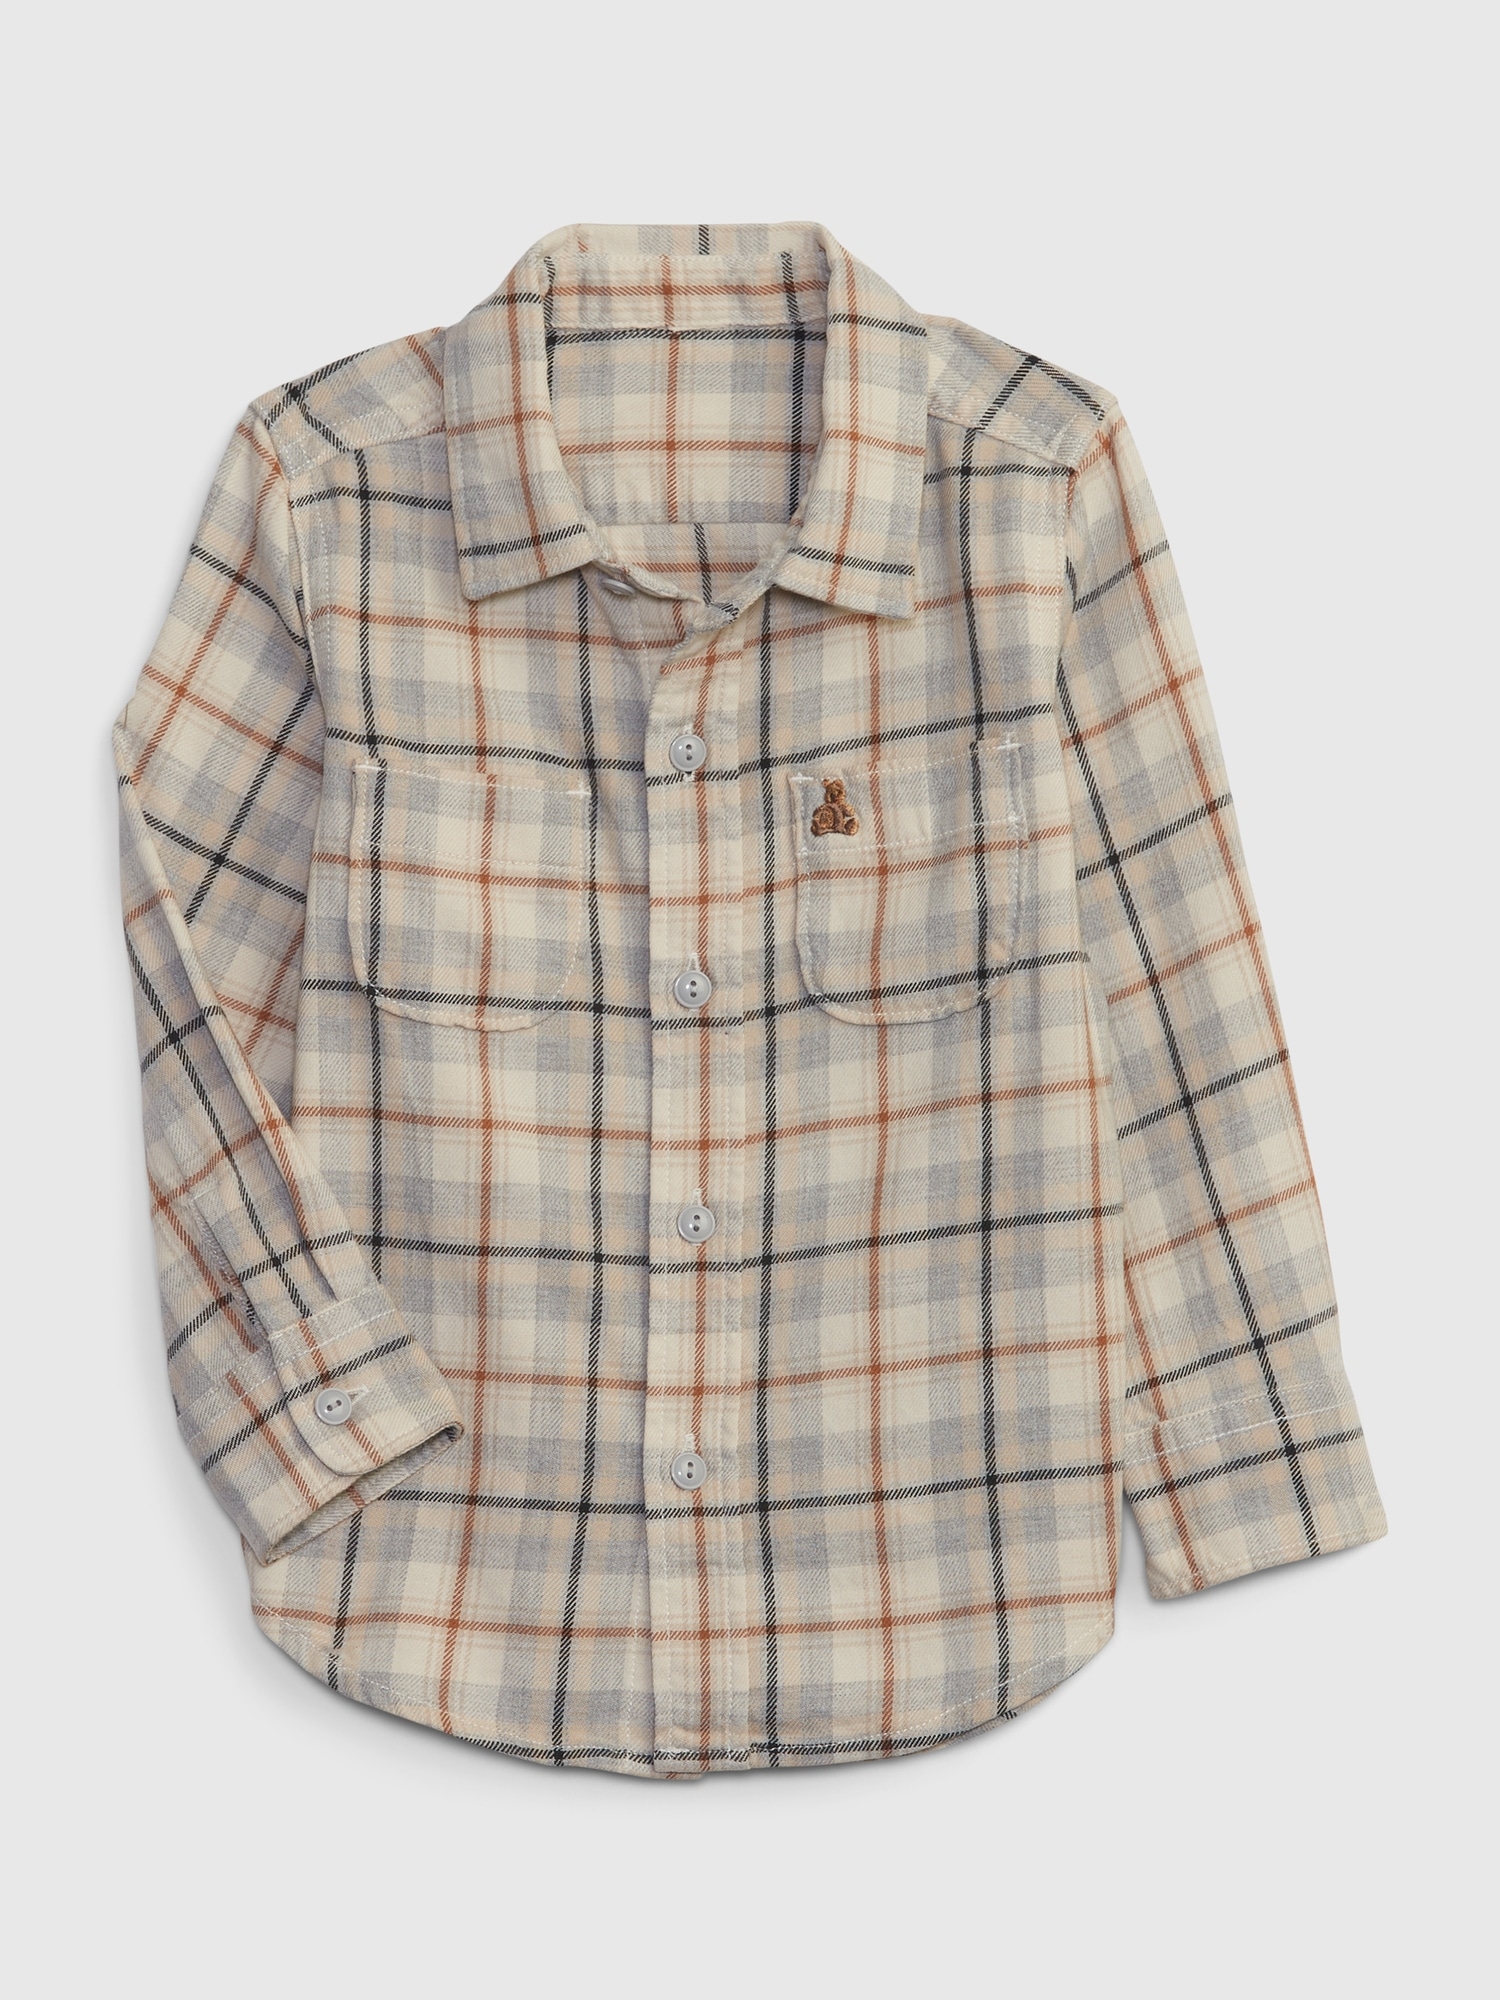 Toddler Organic Cotton Flannel Shirt